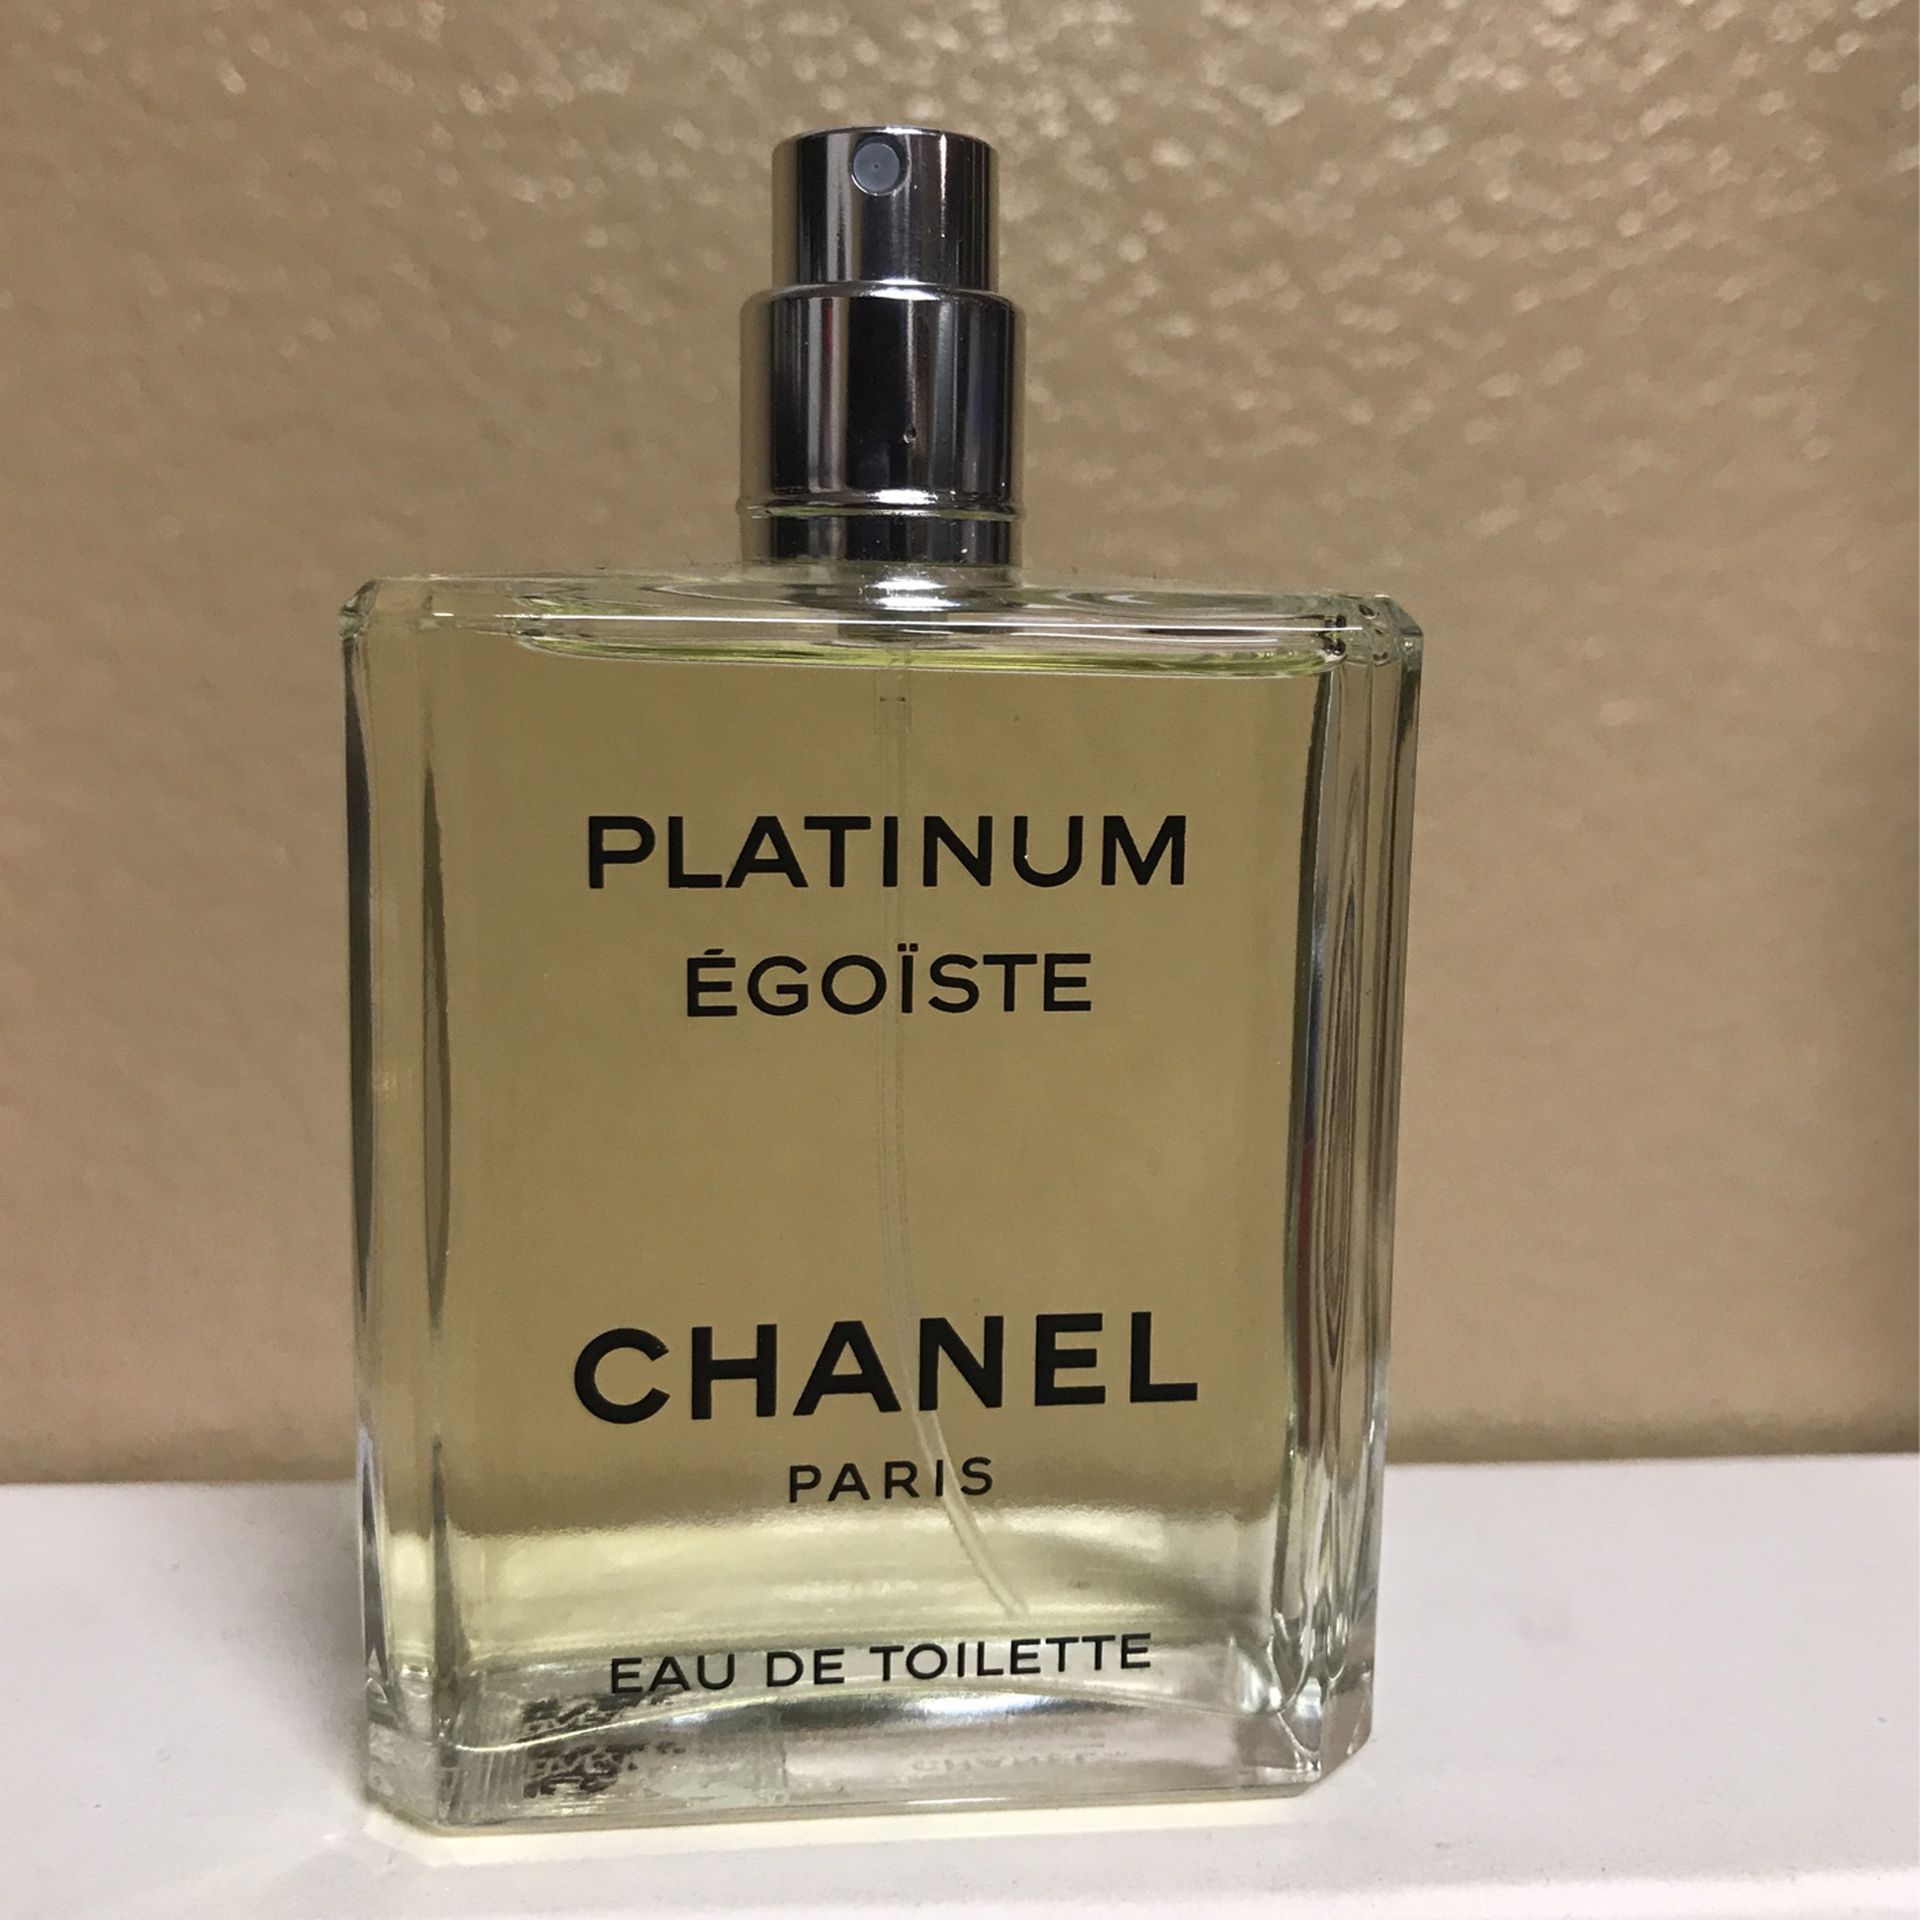 Chanel Platinum Egoiste 100ml Mens Cologne for Sale in Rancho